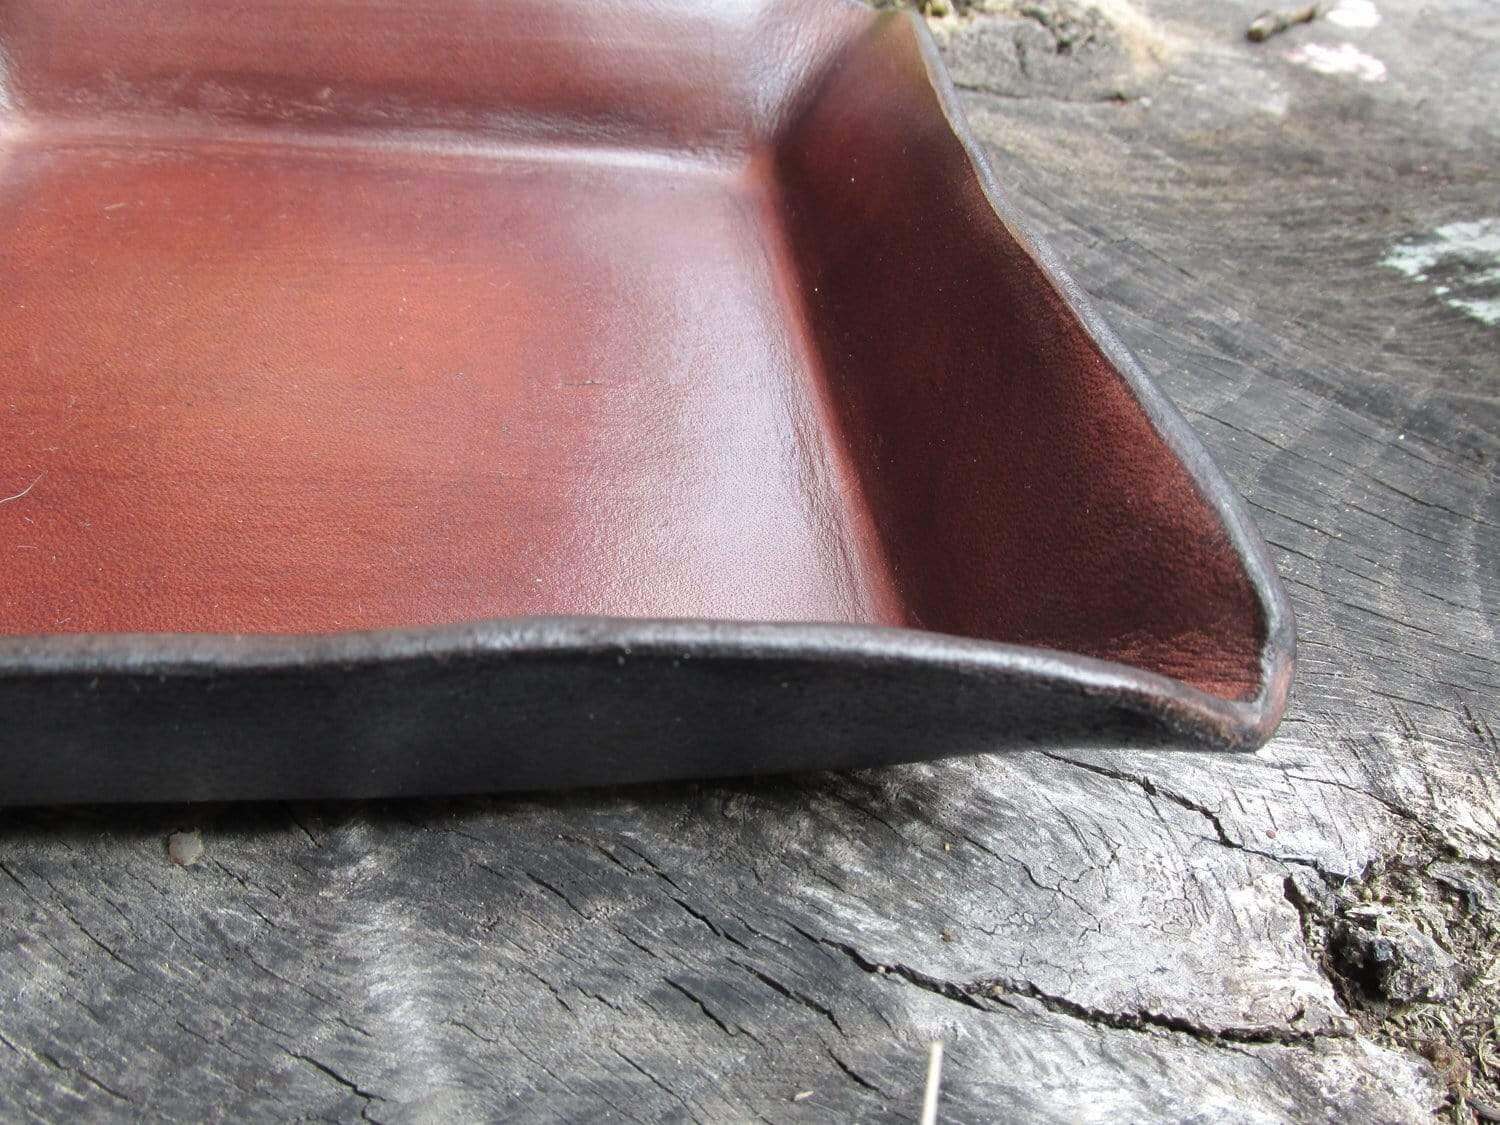 Louis Vuitton Monogram Brown Custom Leather Tray